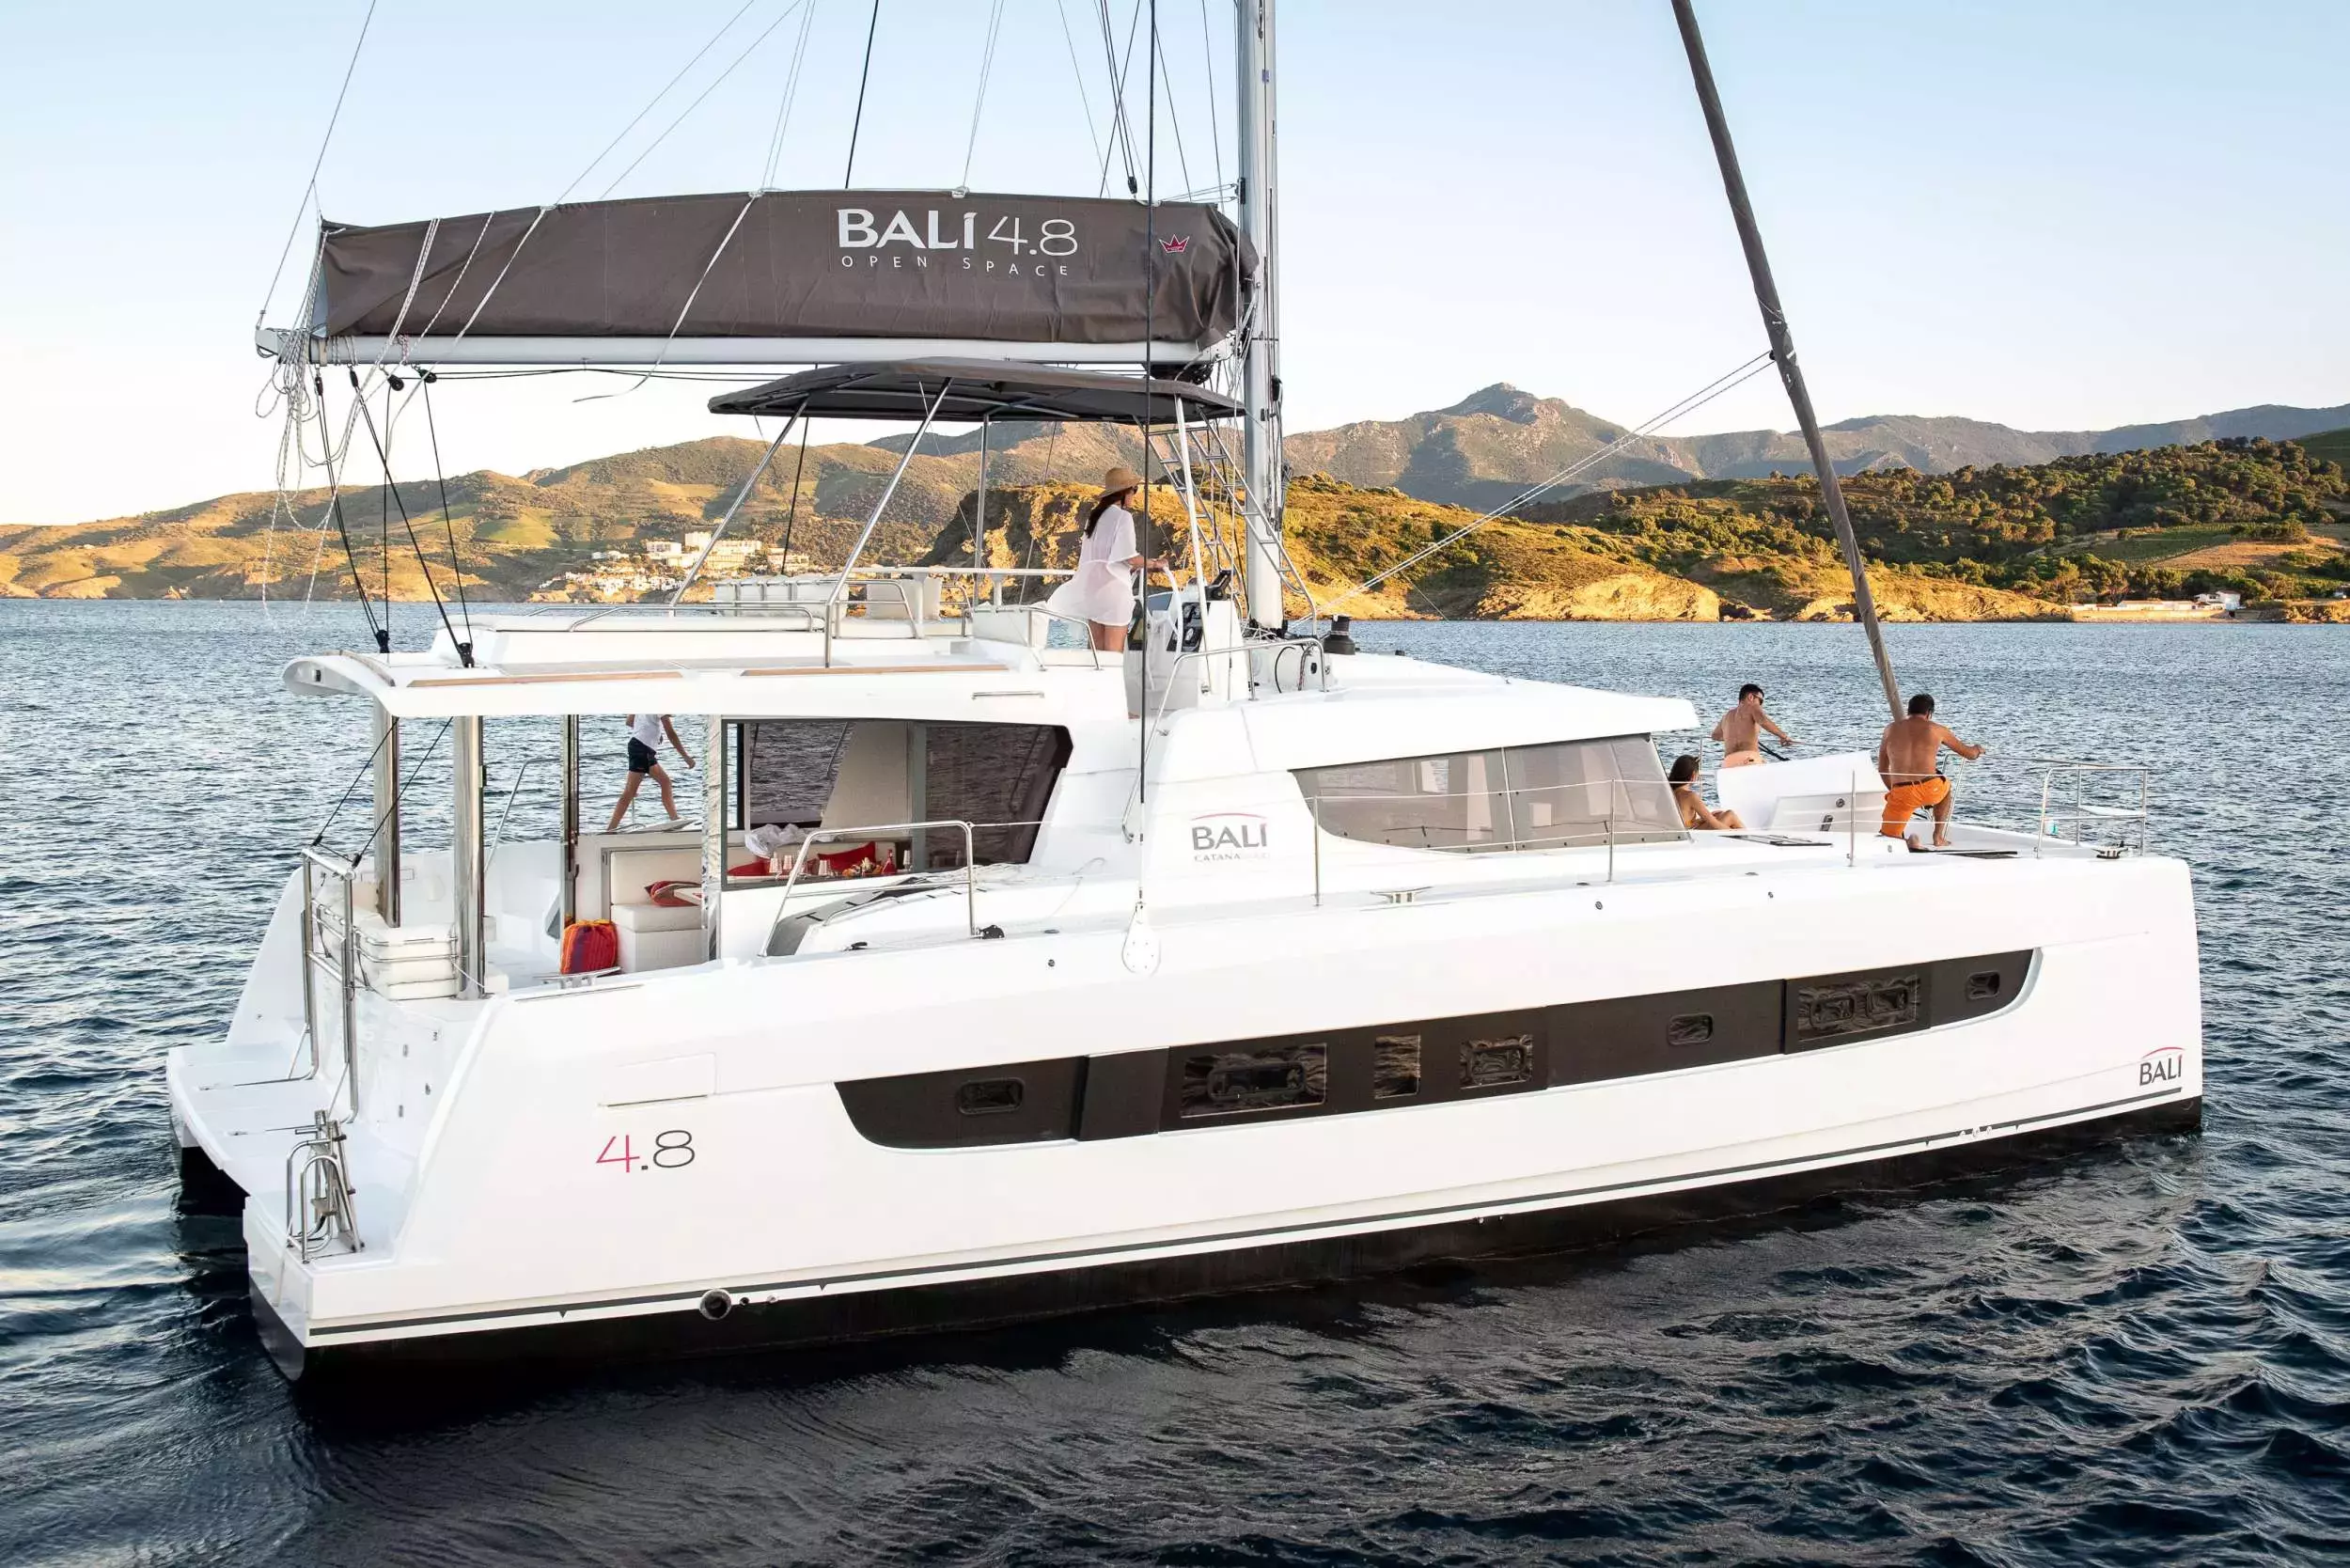 Yemaya by Bali Catamarans - Top rates for a Charter of a private Sailing Catamaran in Spain